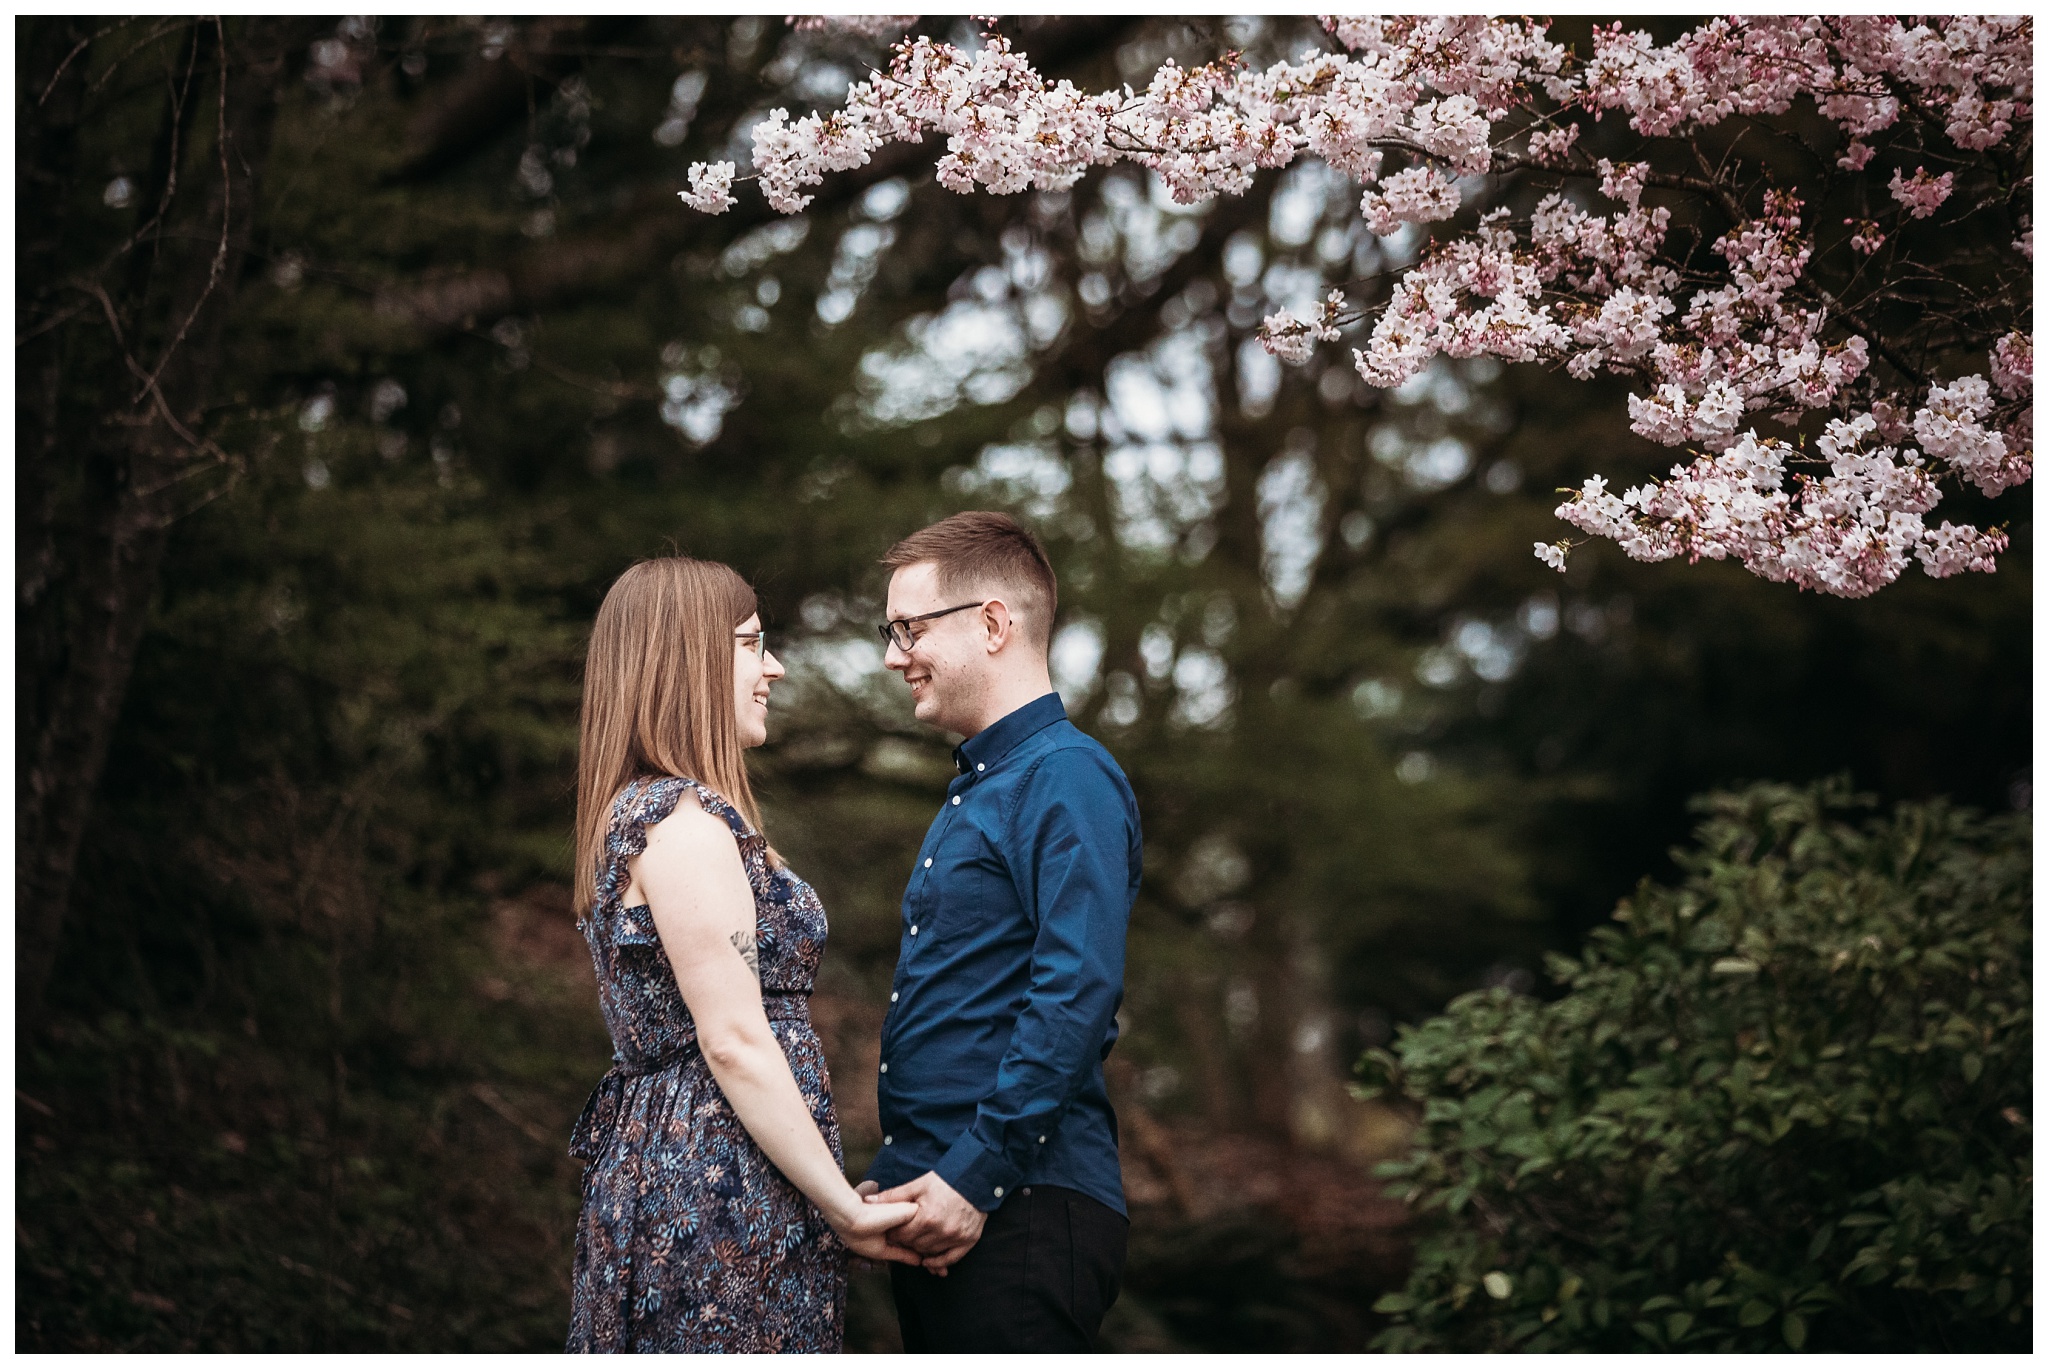 Queen Elizabeth Park Spring Engagement Photography Cherry Blossom Photos Couple Romantic_0011.jpg